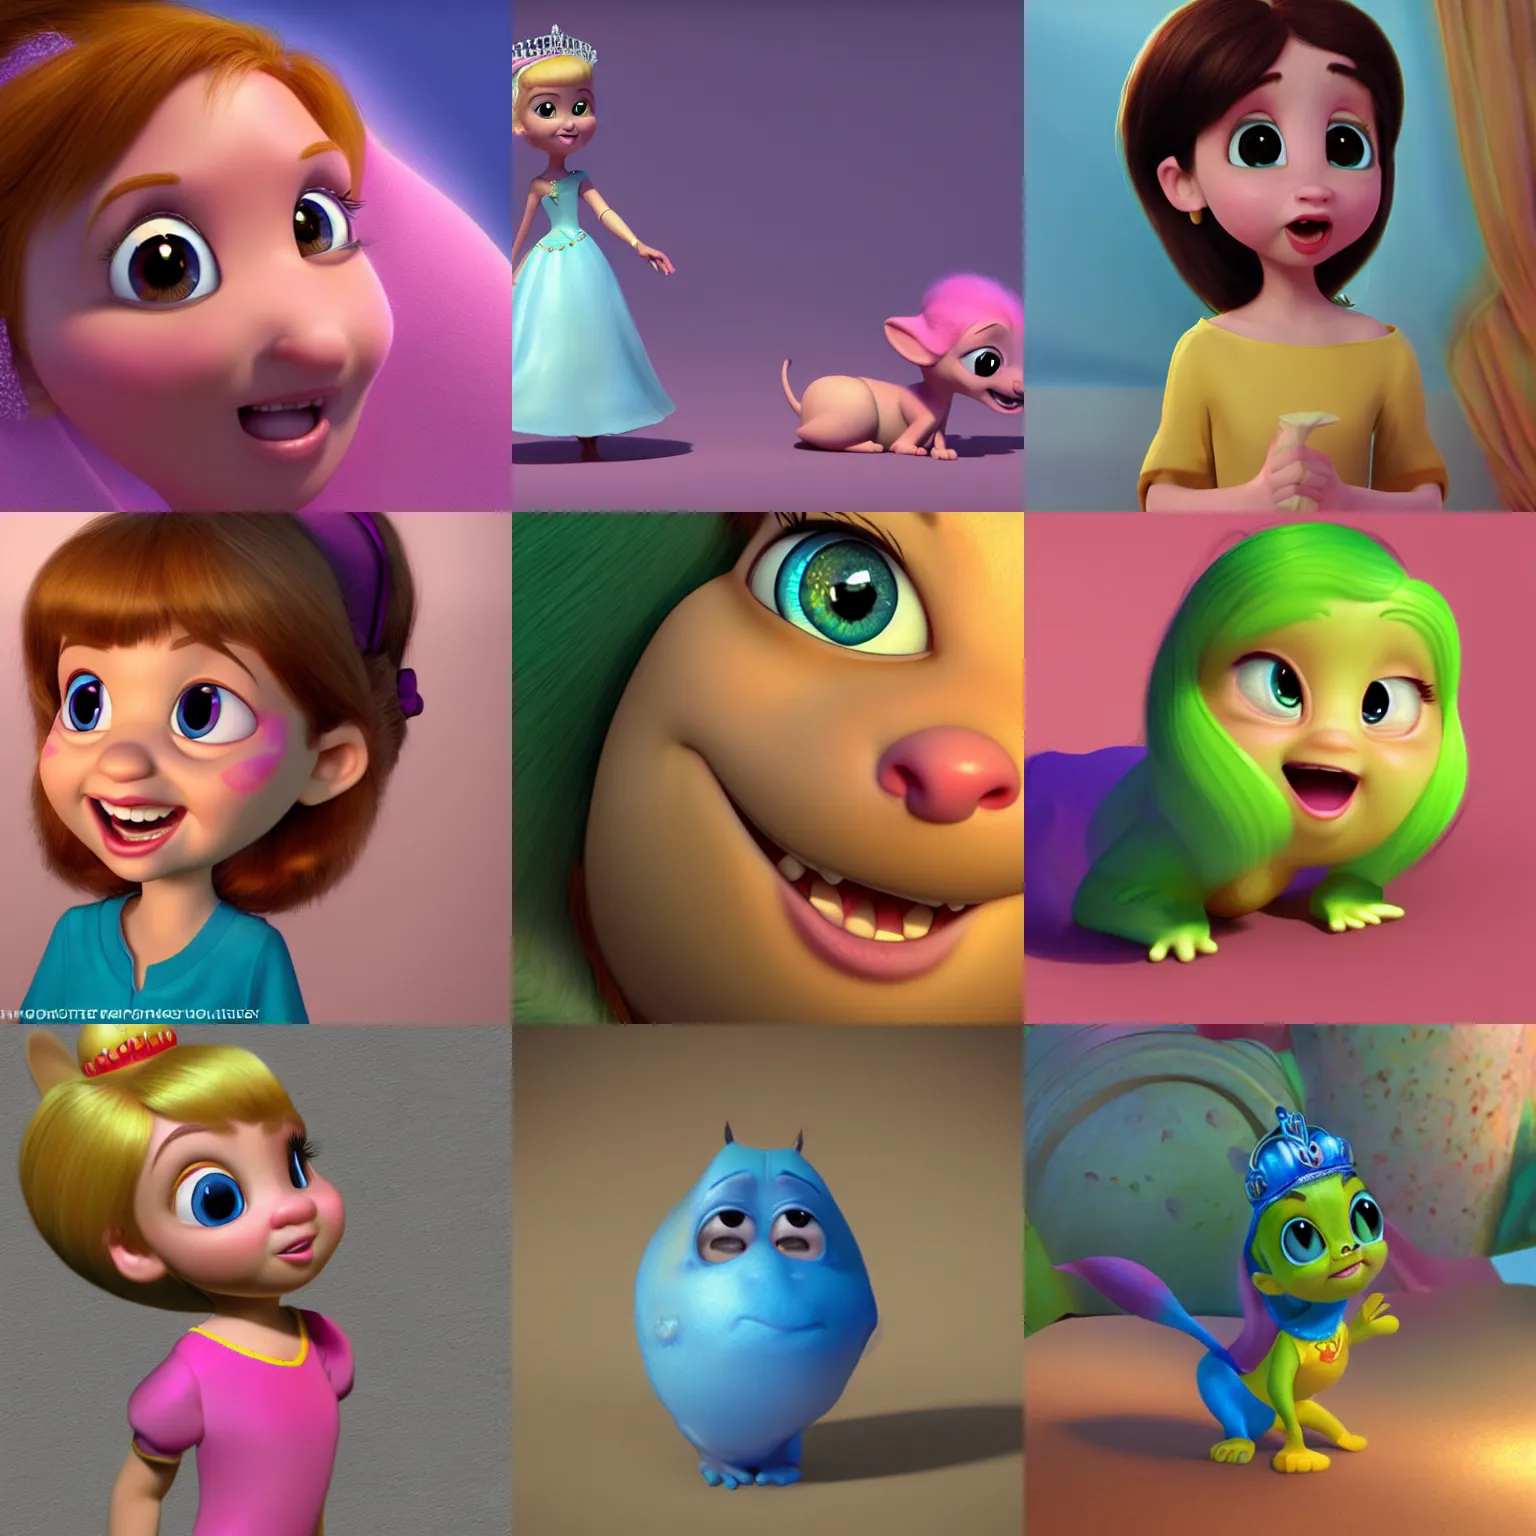 Prompt: princess, photorealistic ,surface scattering,cgi,cartoon cute , 3d , disney style,pixar